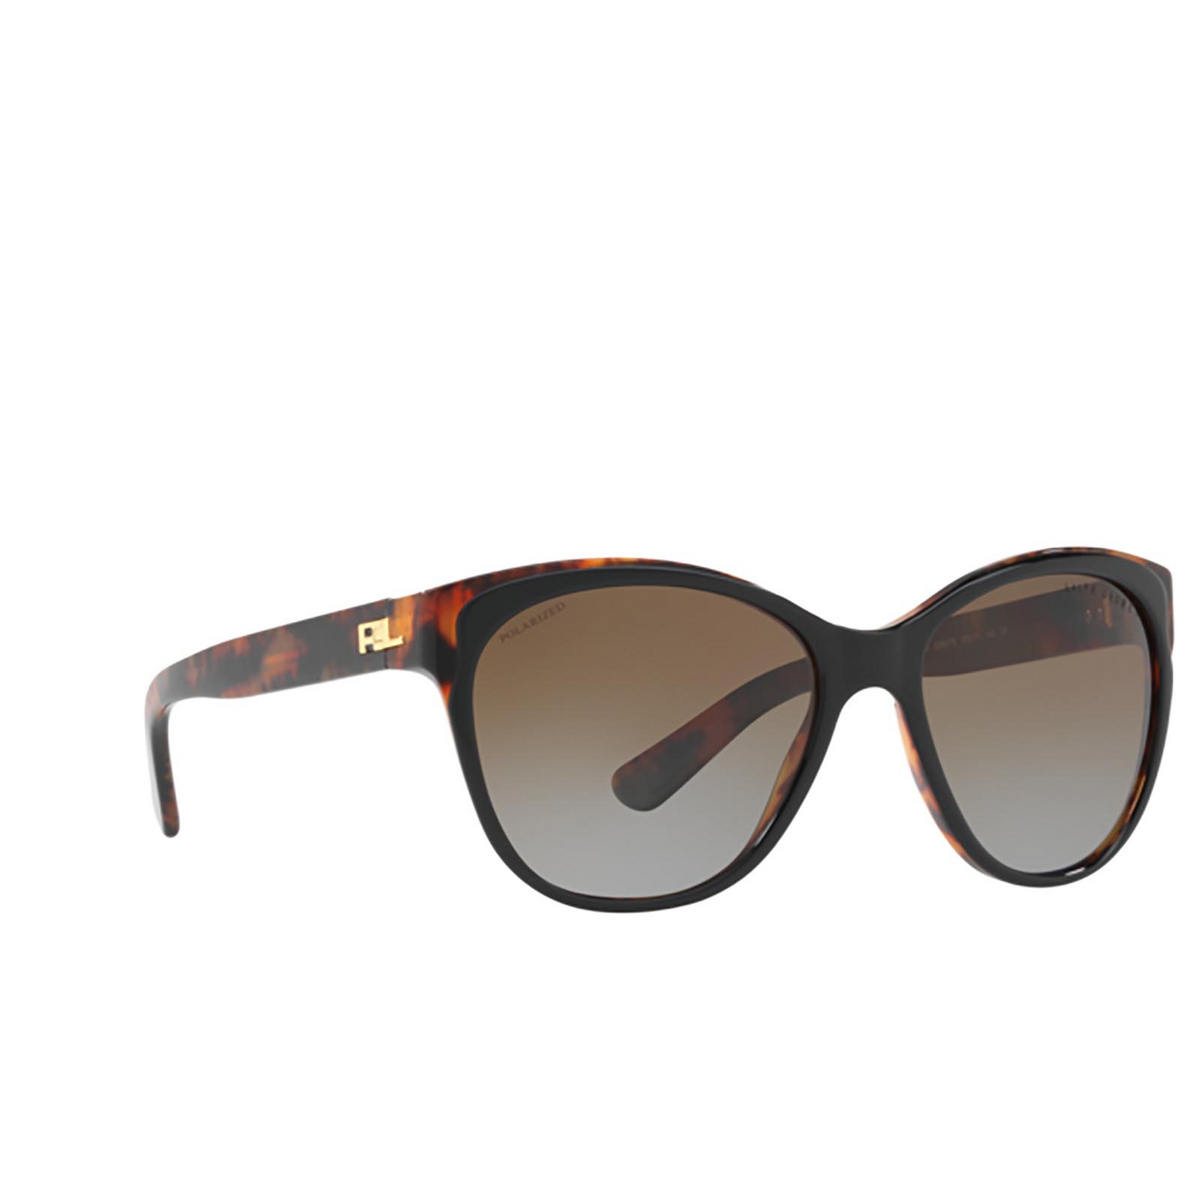 Ralph Lauren RL8156 Sunglasses 5260T5 Shiny Black On Jerry Havana - three-quarters view